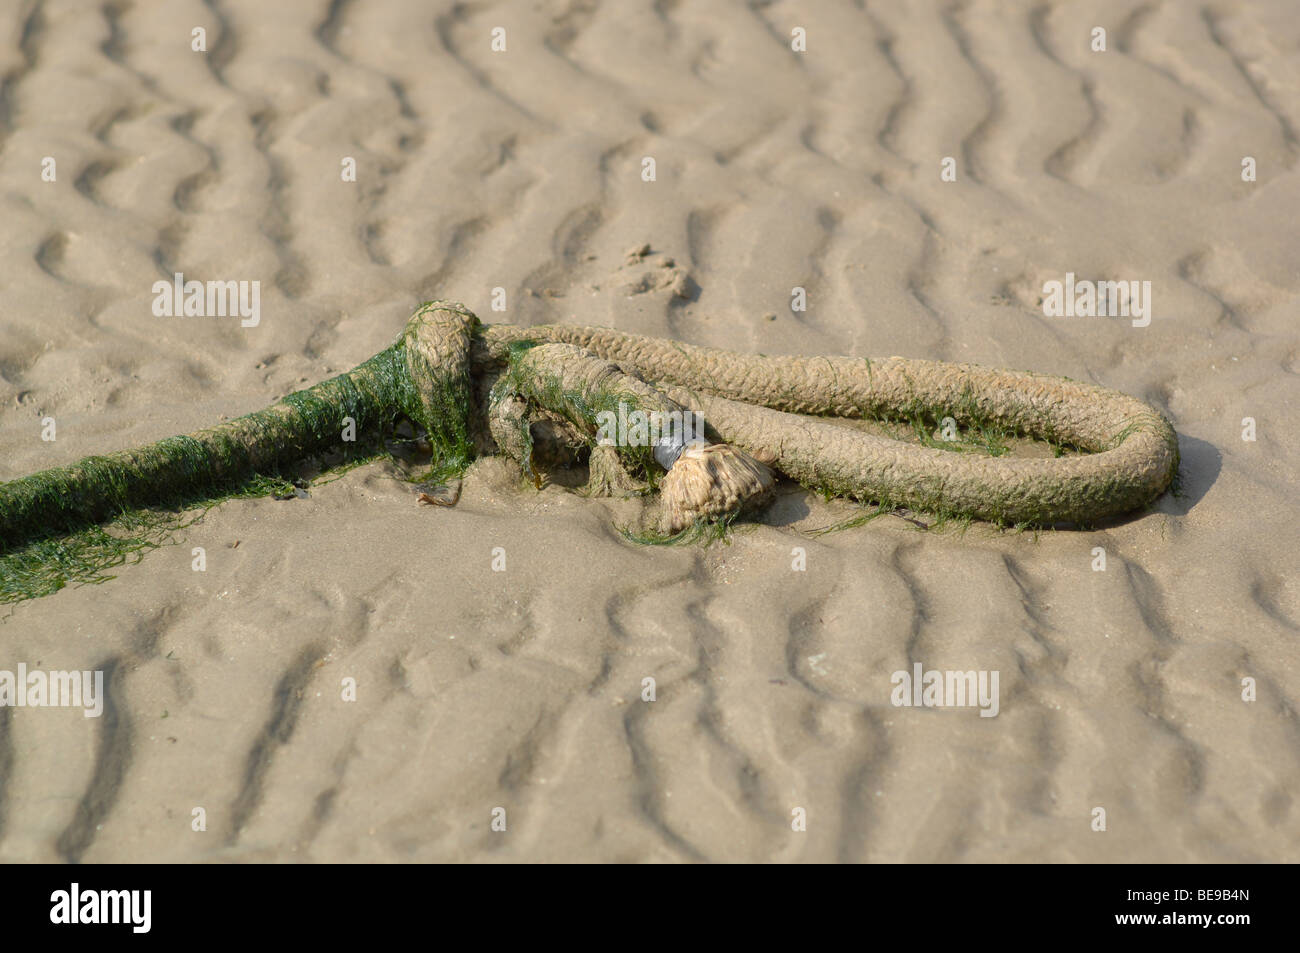 Rope on a sandy beach Stock Photo